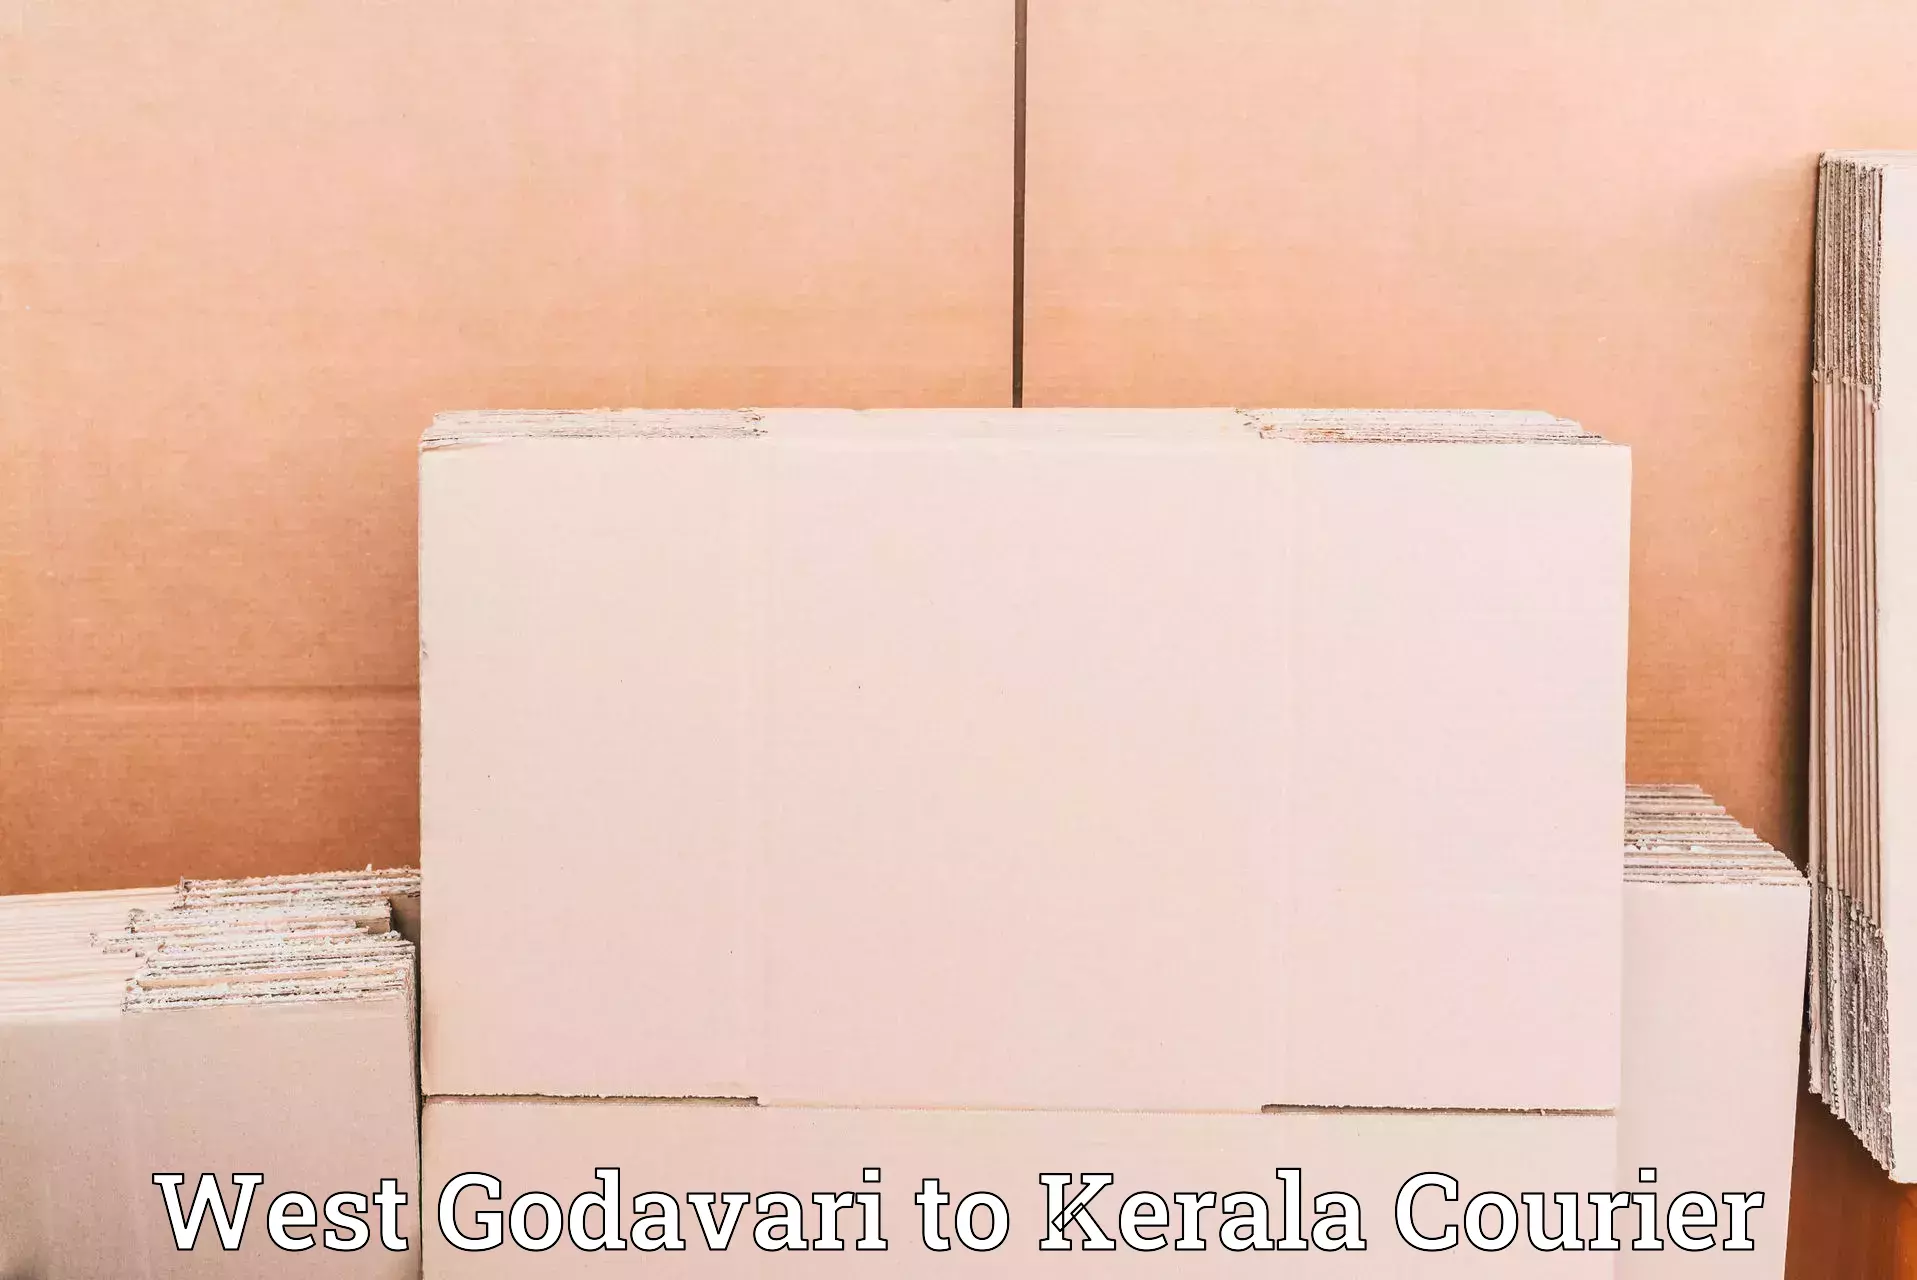 Courier app West Godavari to Kerala